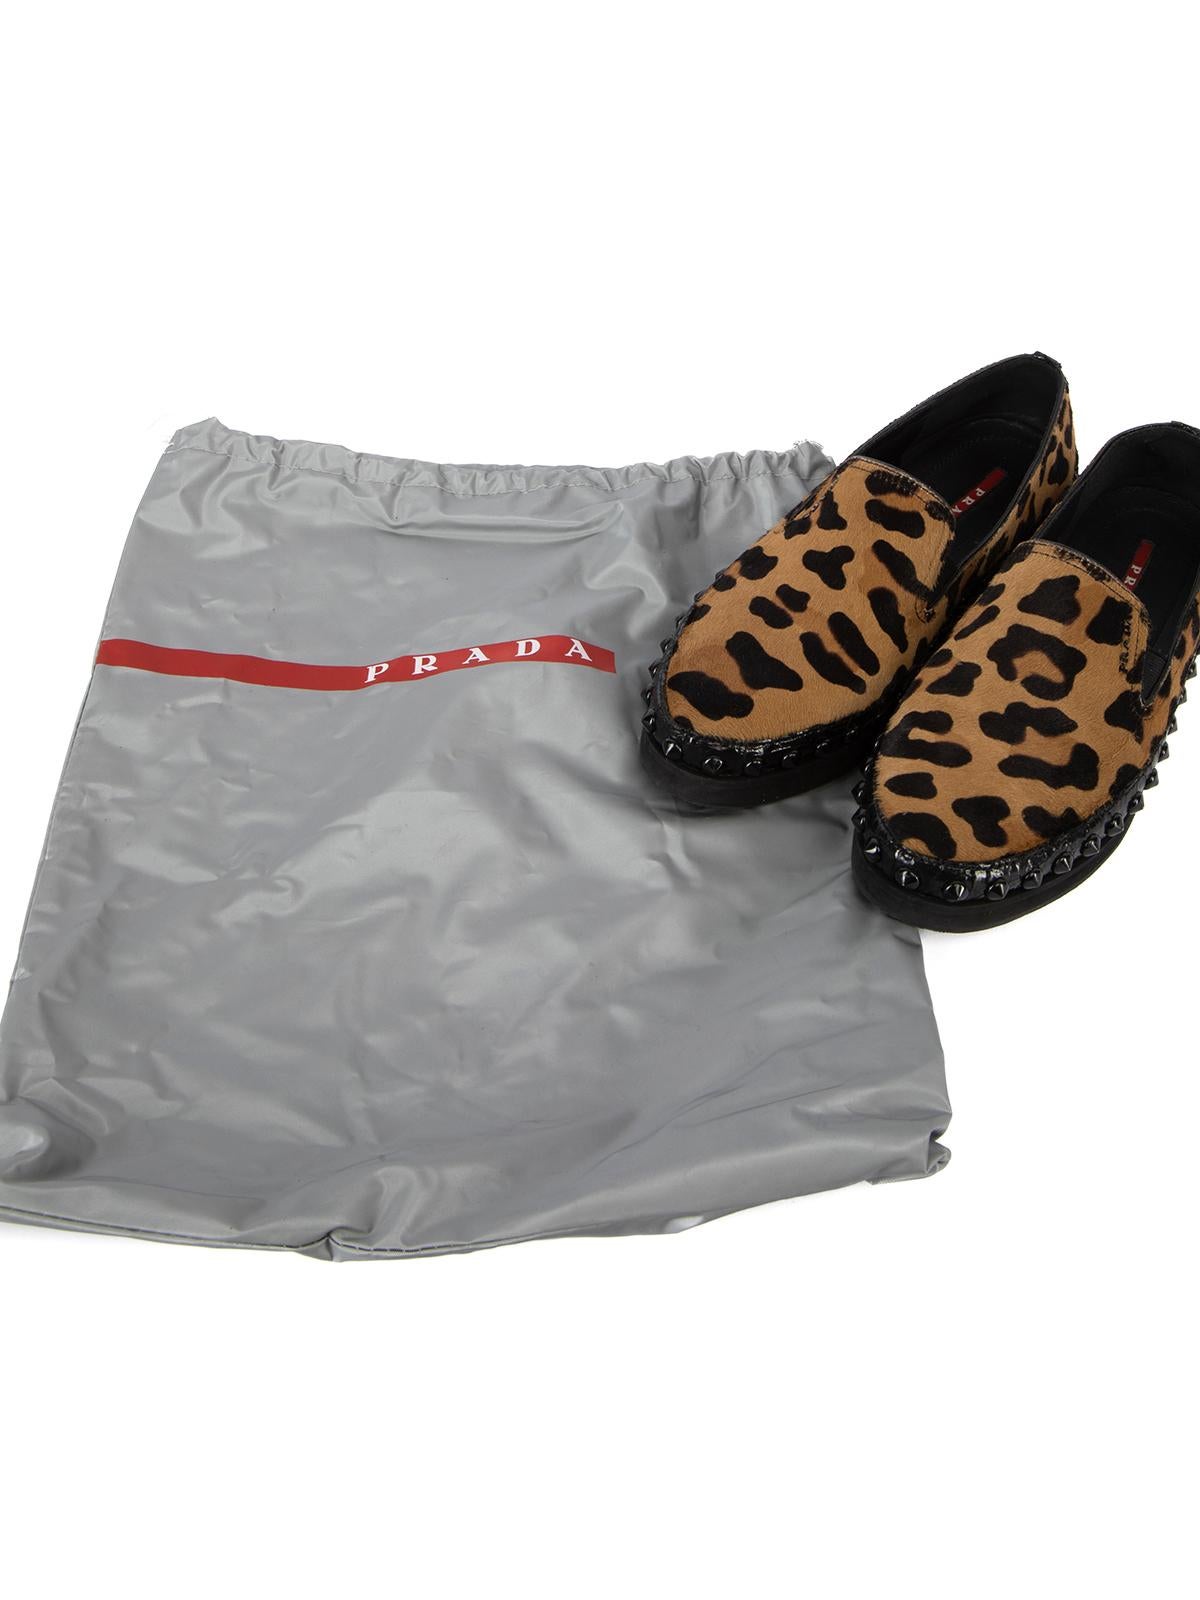 Pre-Loved Prada Women's Cheetah Loafers 3